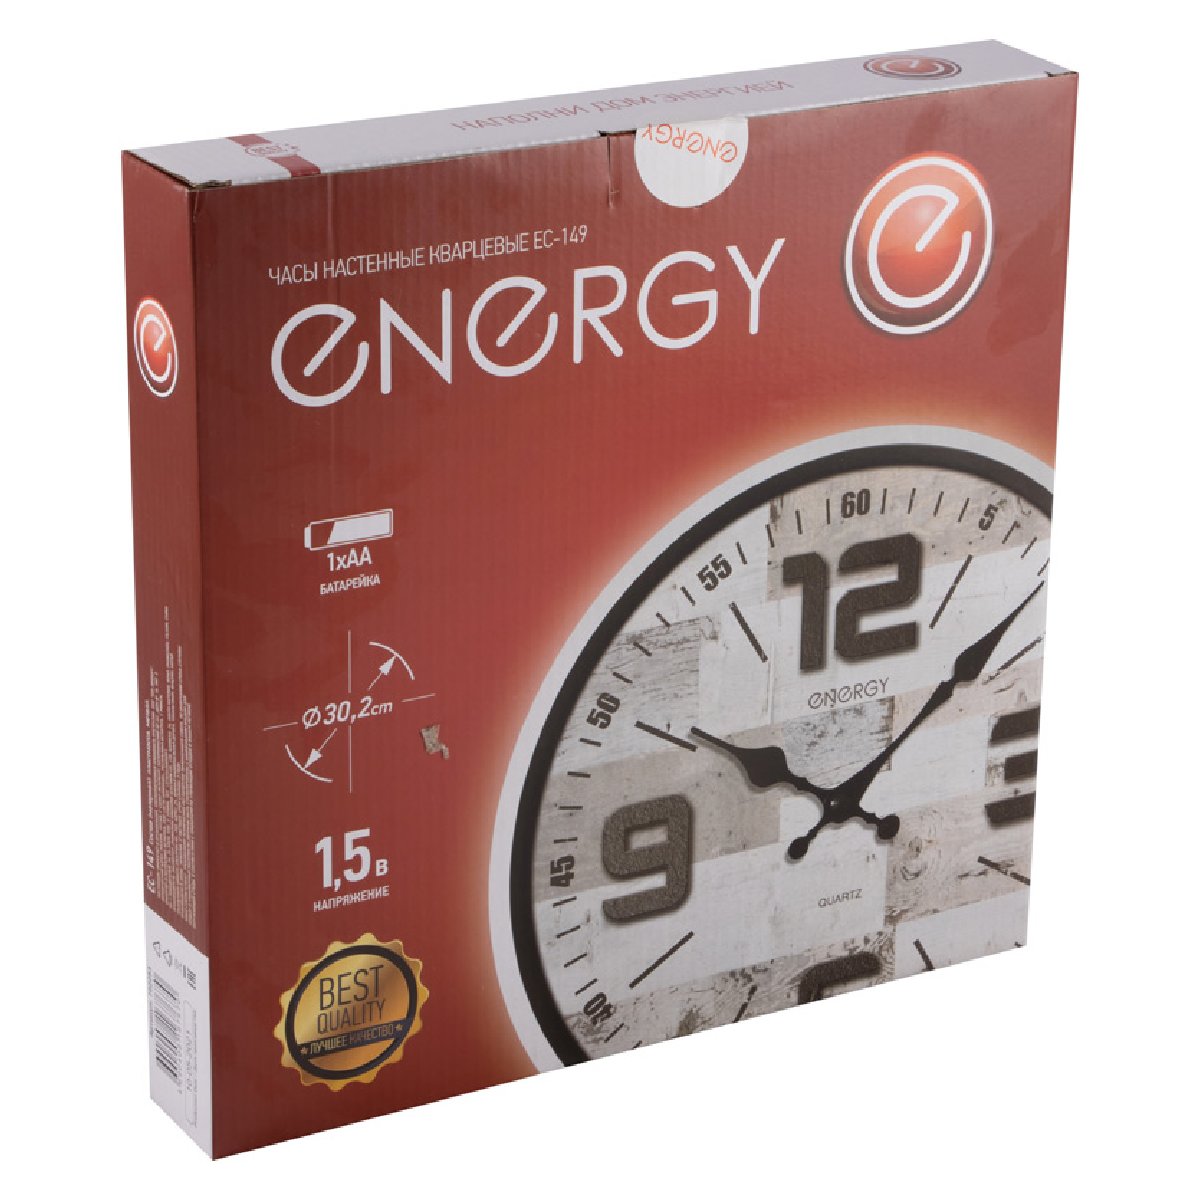 Часы настенные кварцевые ENERGY модель ЕС-149 (102253)